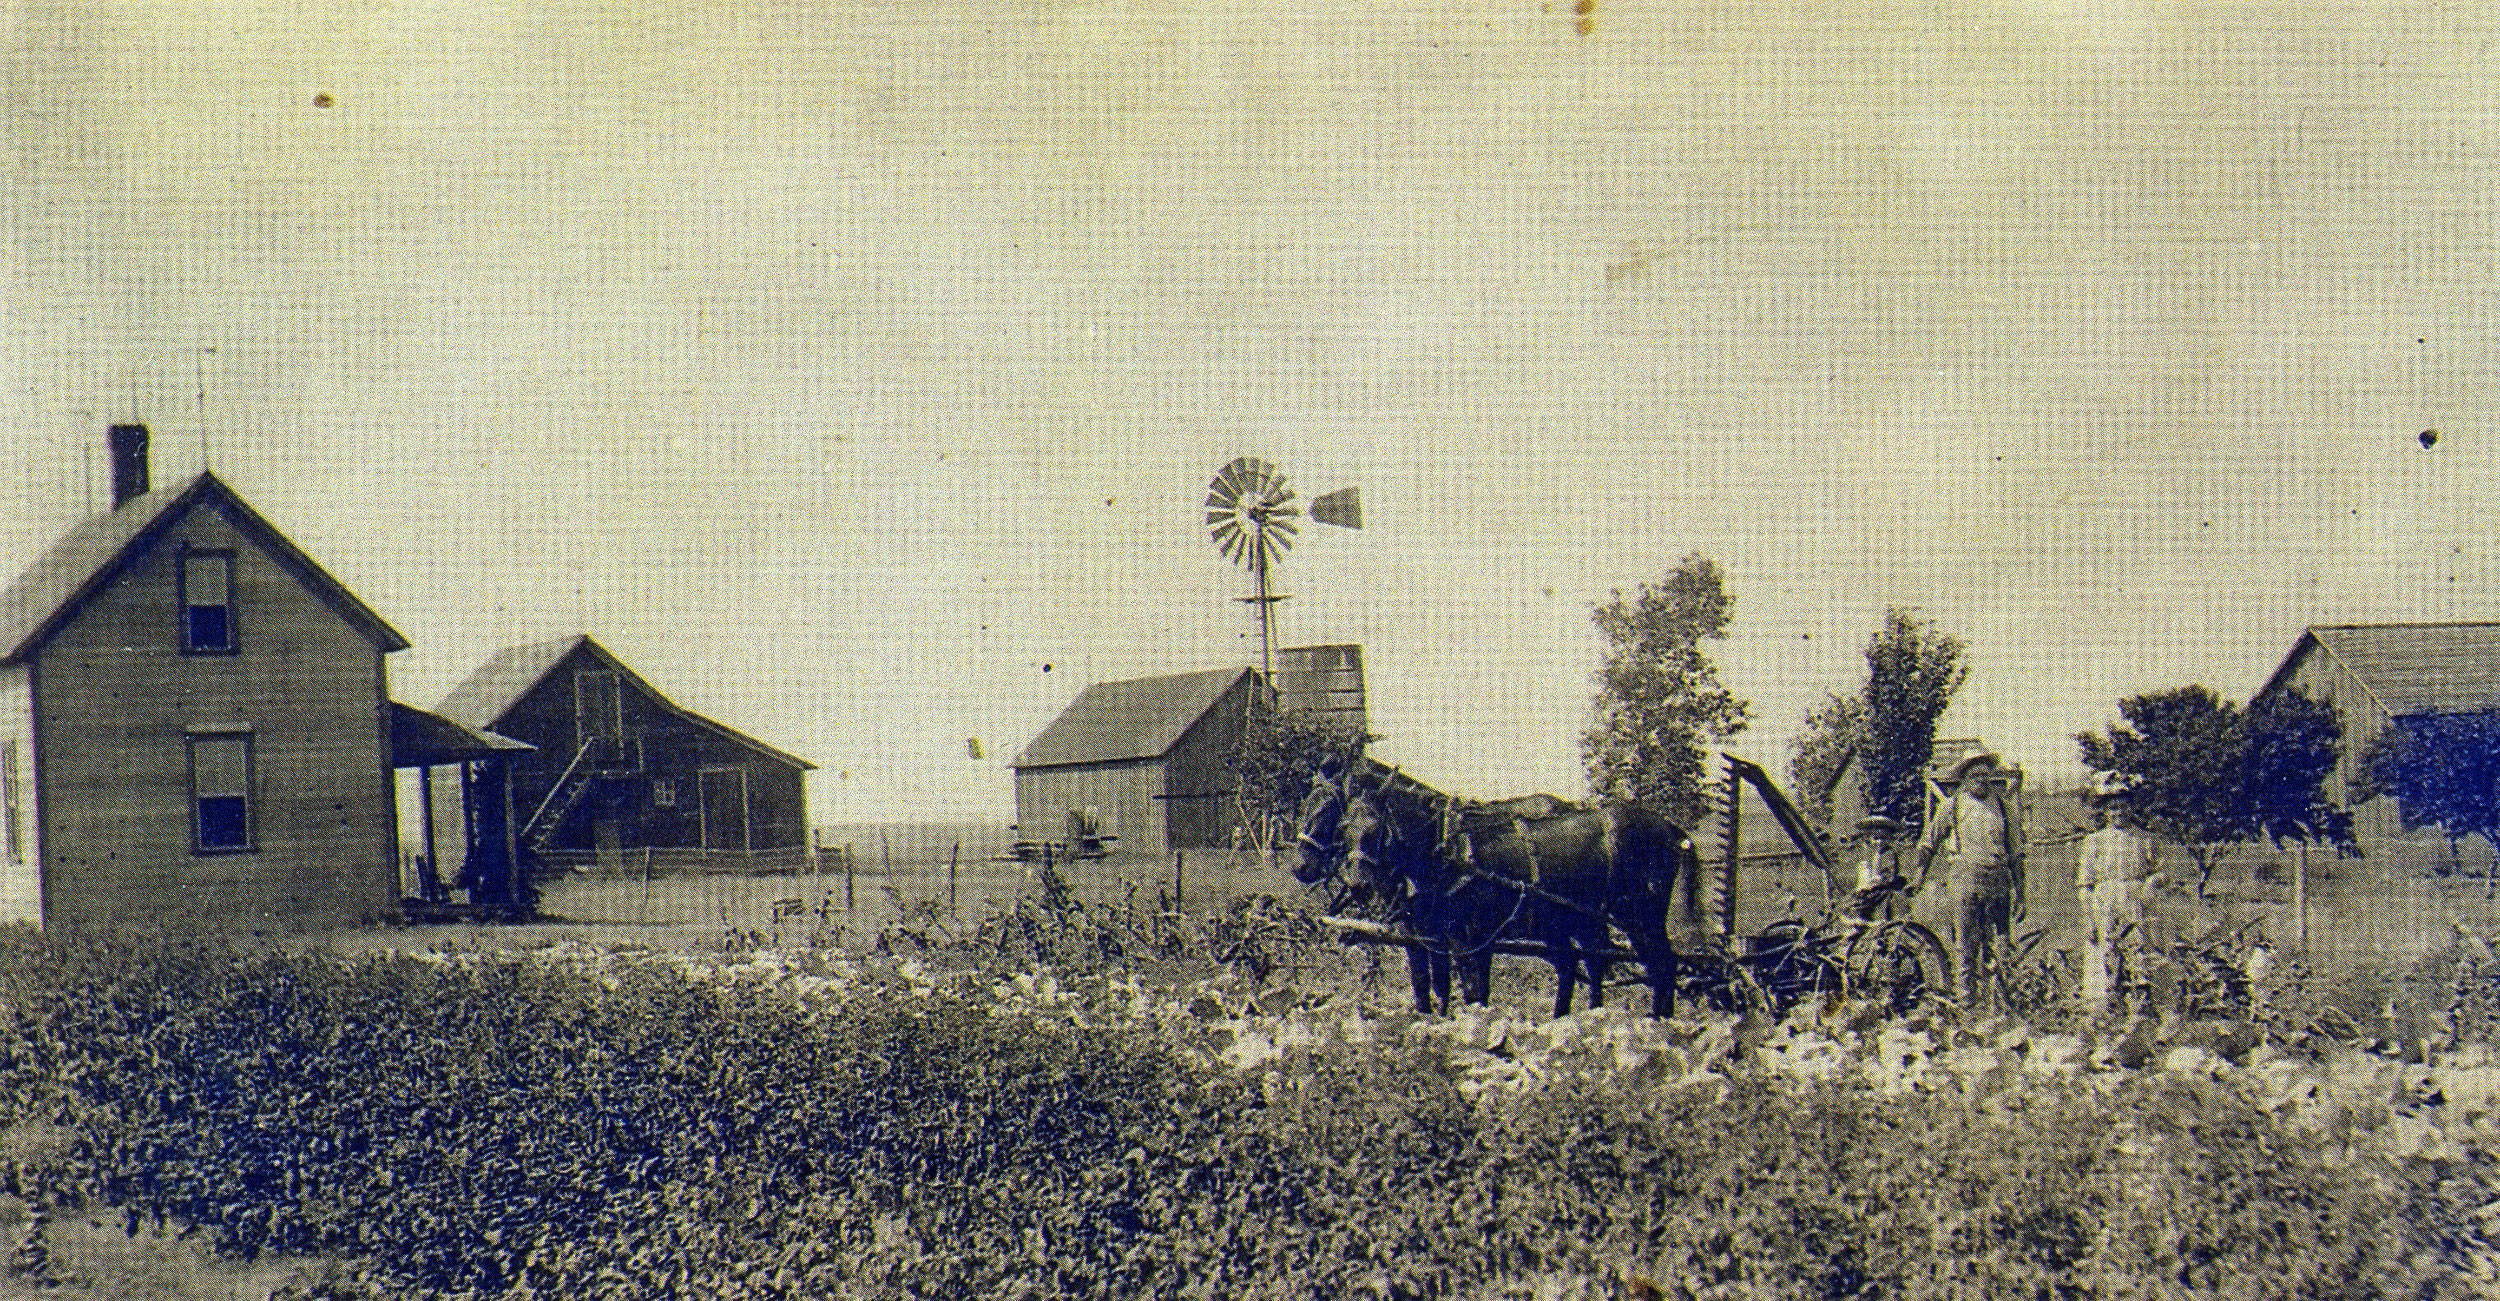 Brekel Farm at Pilot Point, Texas, 1908-1912.